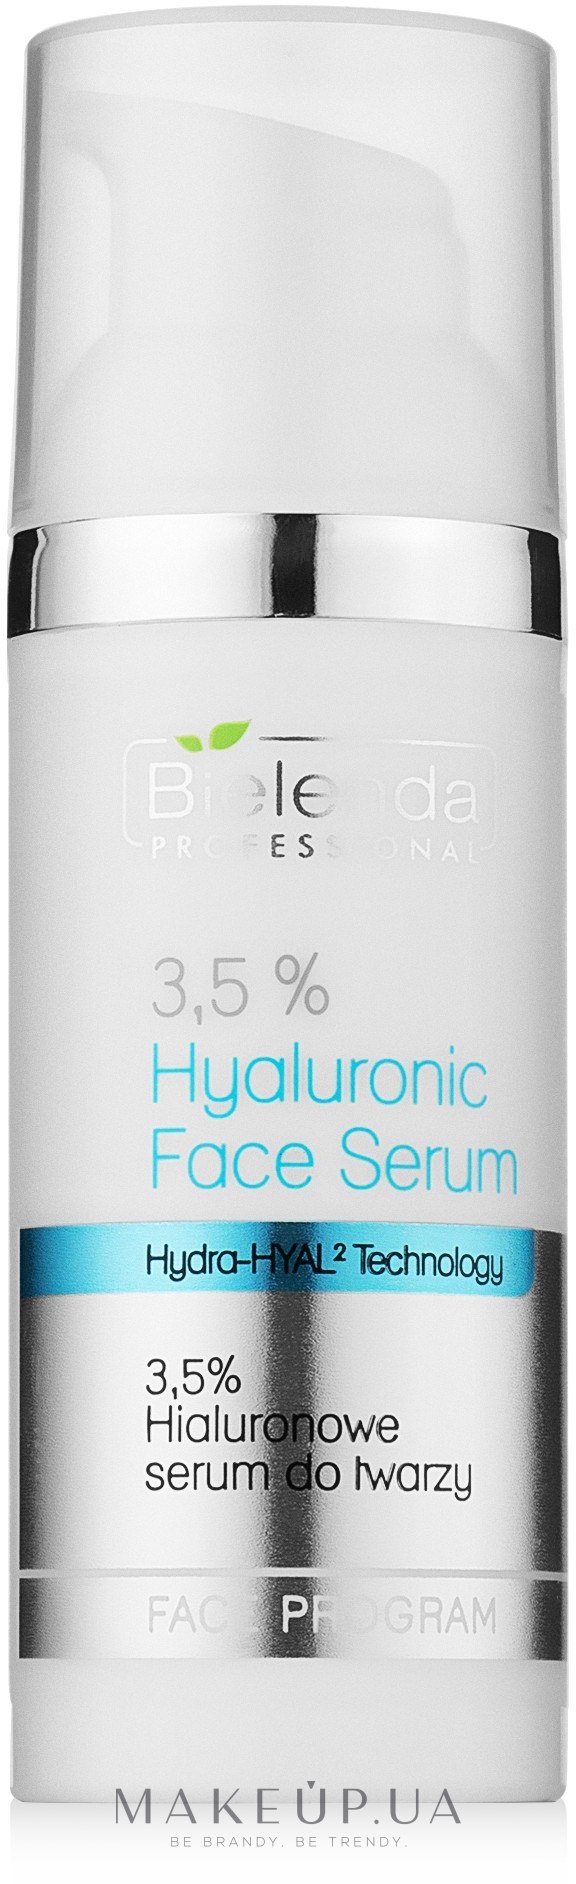 Гіалуронова сироватка для обличчя  - Bielenda Professional Face Program 3.5% Hyaluronic Face Serum — фото 50g